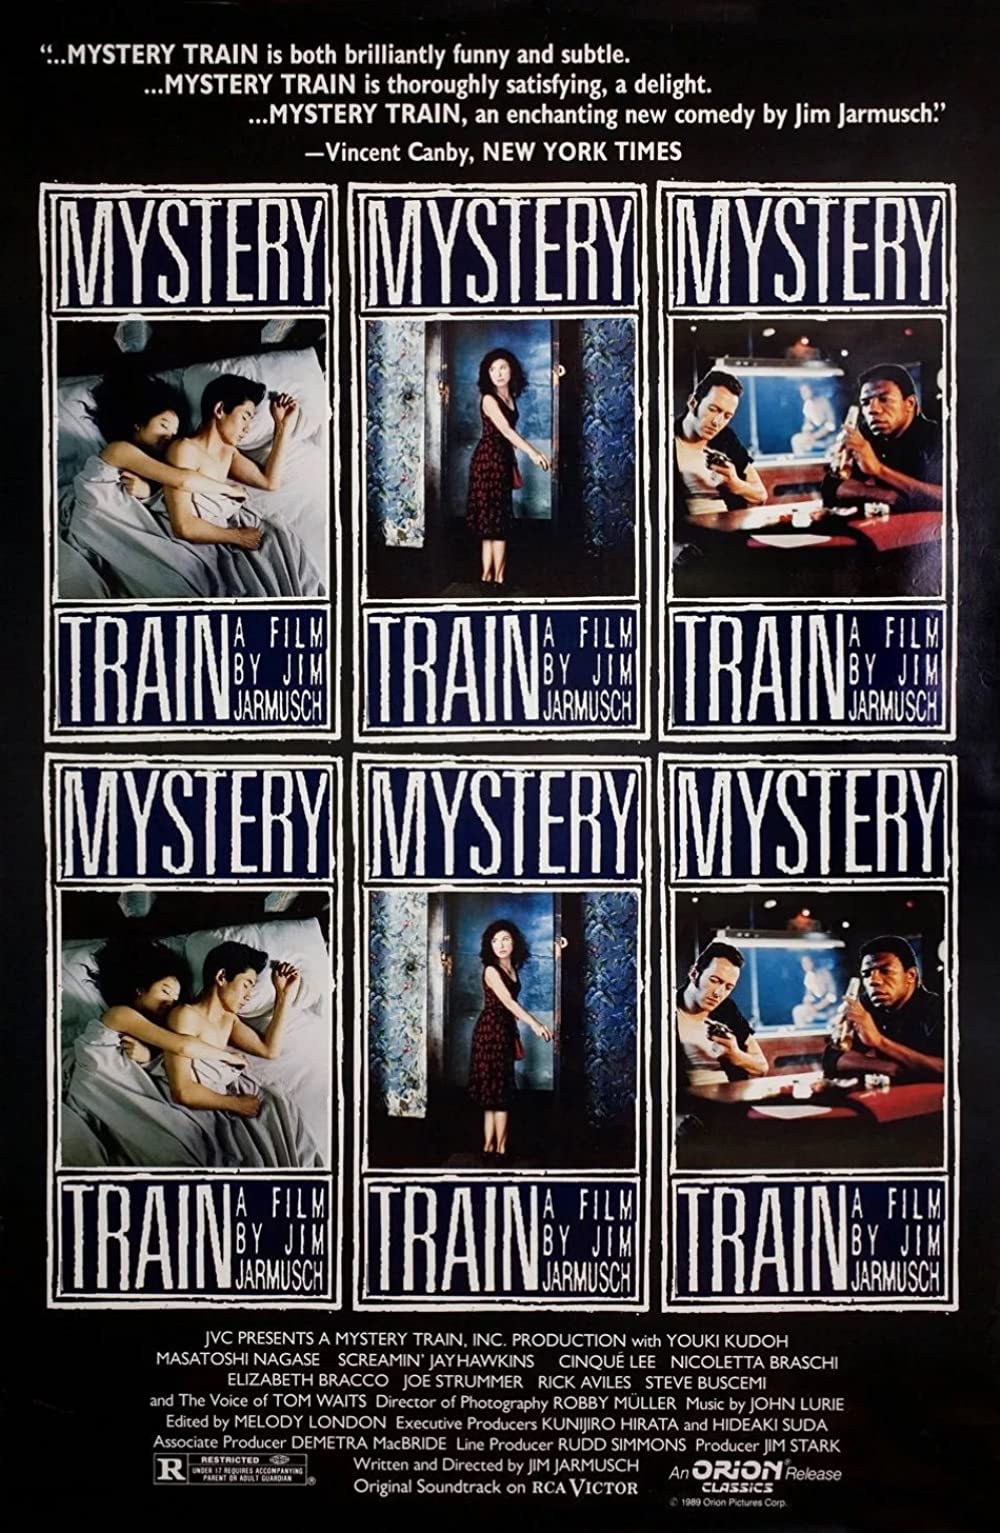 Filmbeschreibung zu Mystery Train (OV)